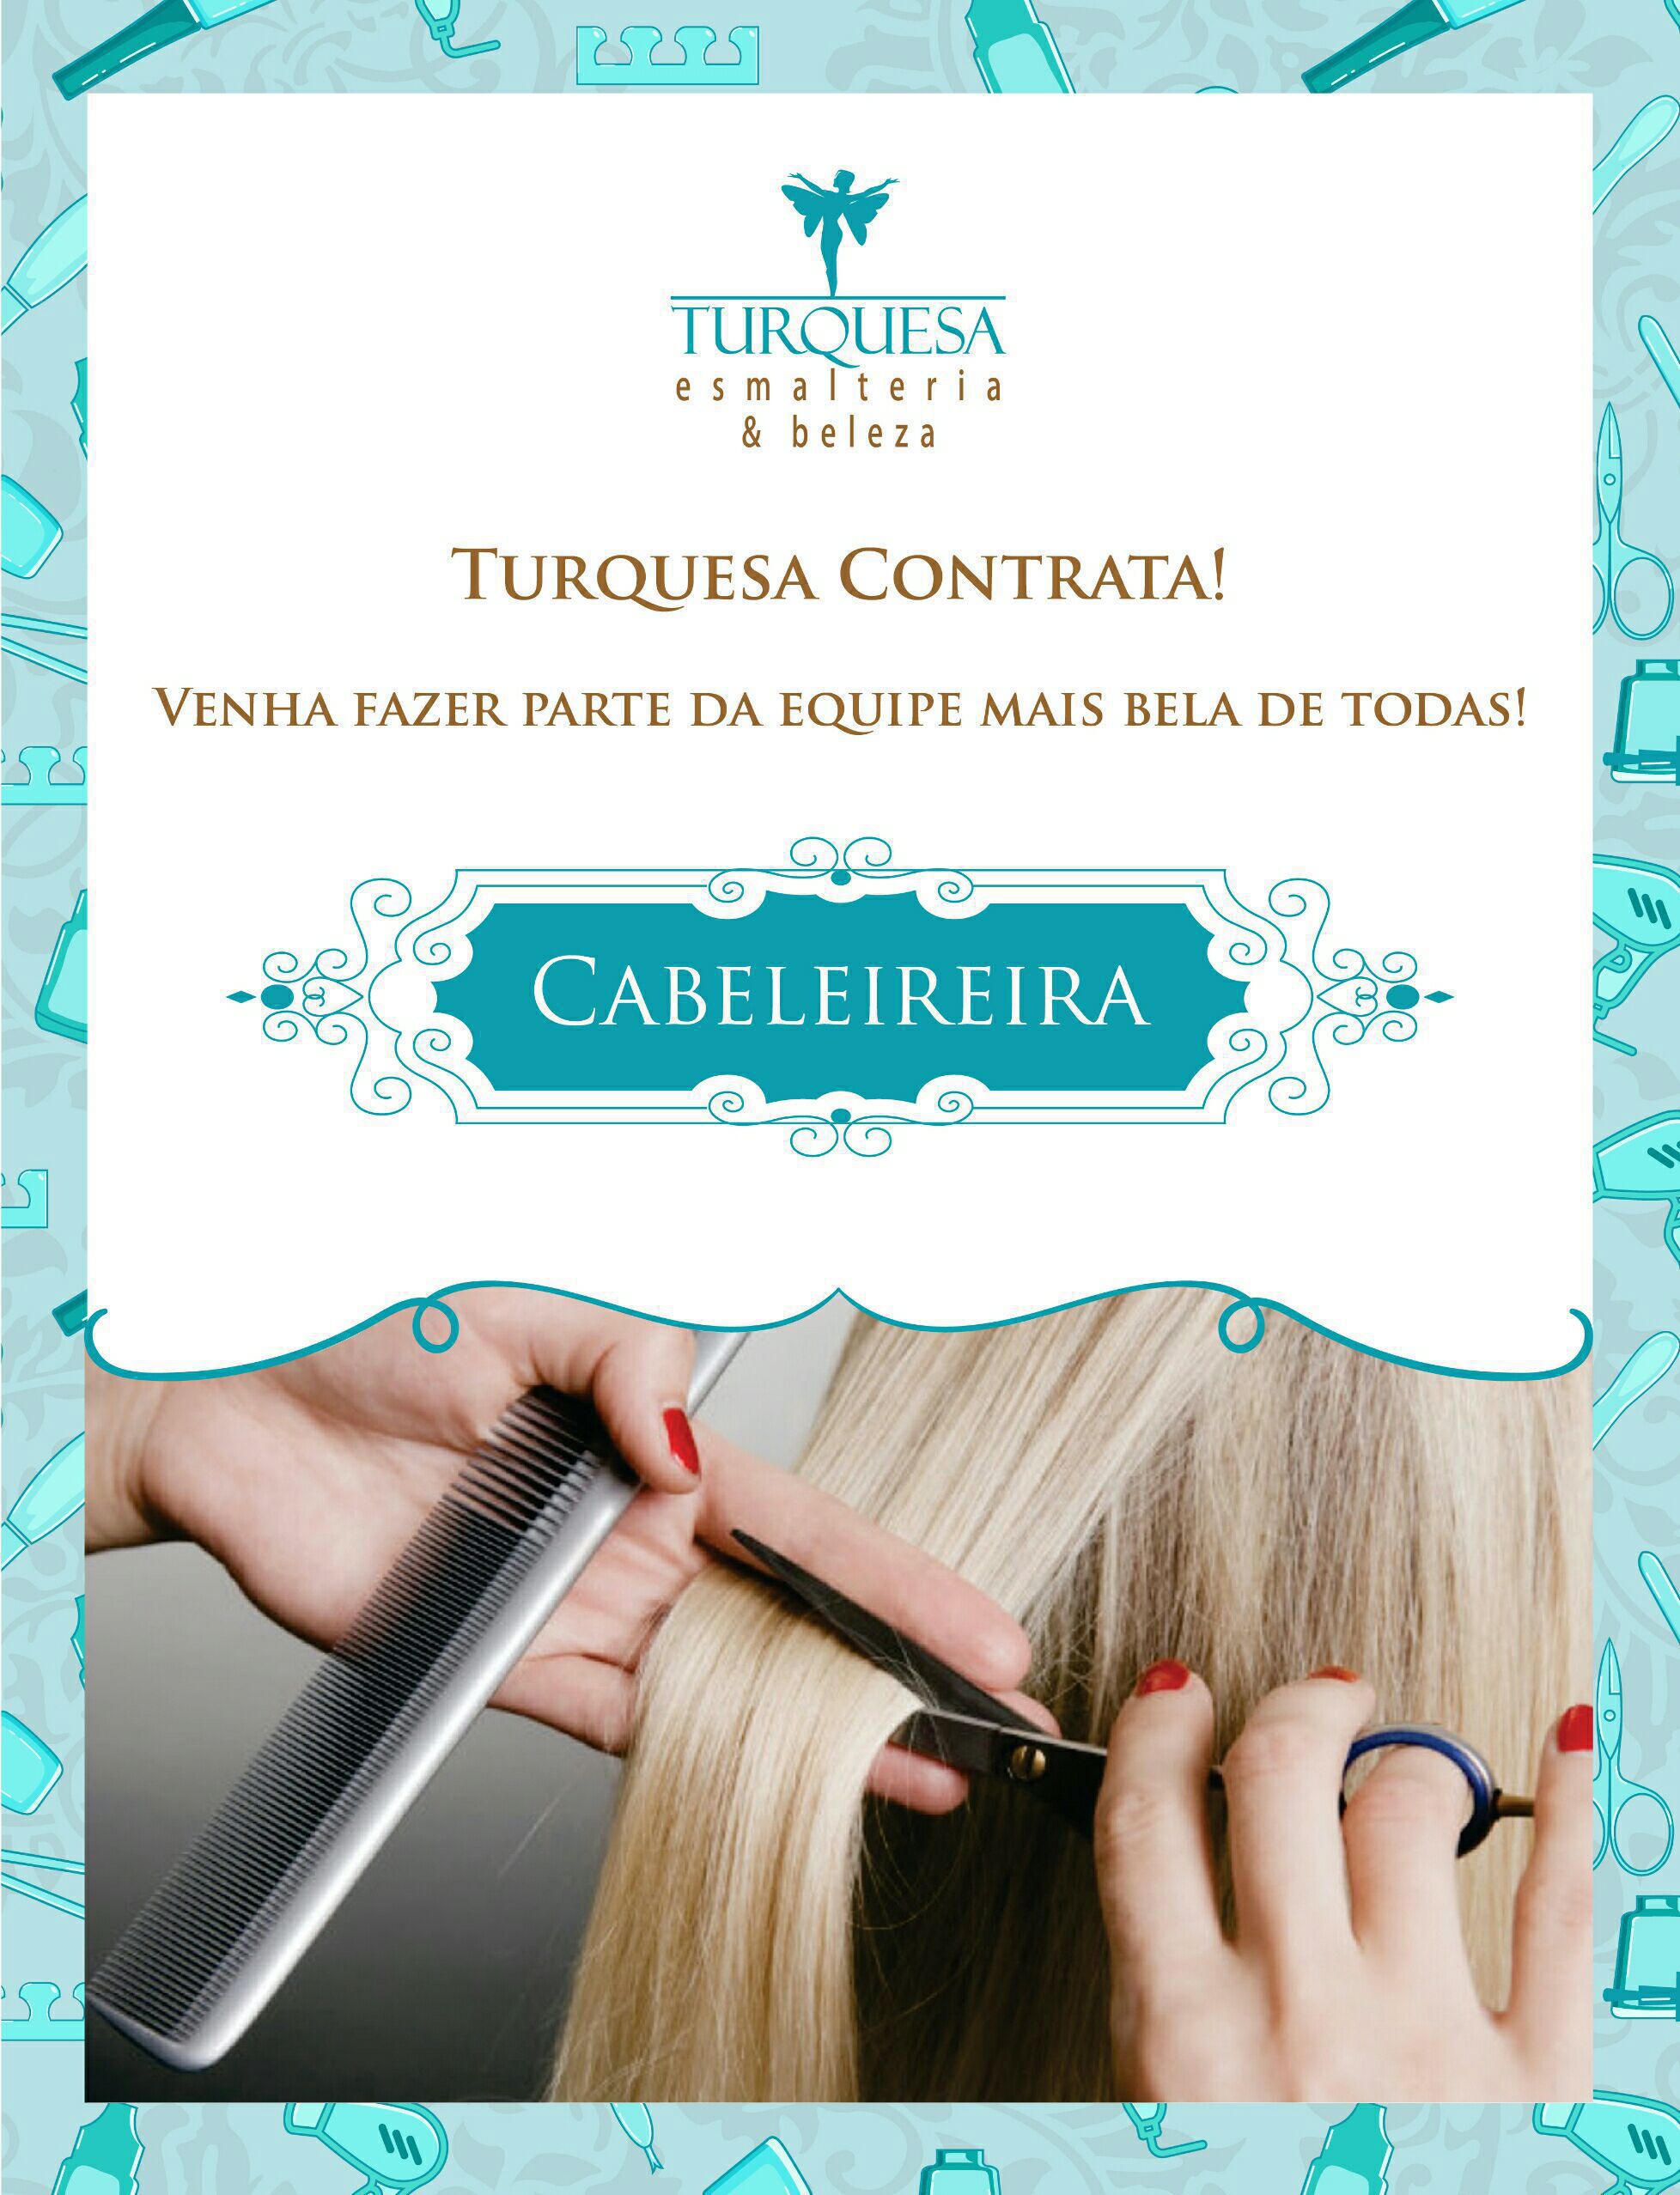 Olá estamos instalando no Tatuapé a esmalteria turquesa, se houver interesse estamos contratando.

Facebook @esmalteriaturquesatatuape
(11)97312-3307 cabelo